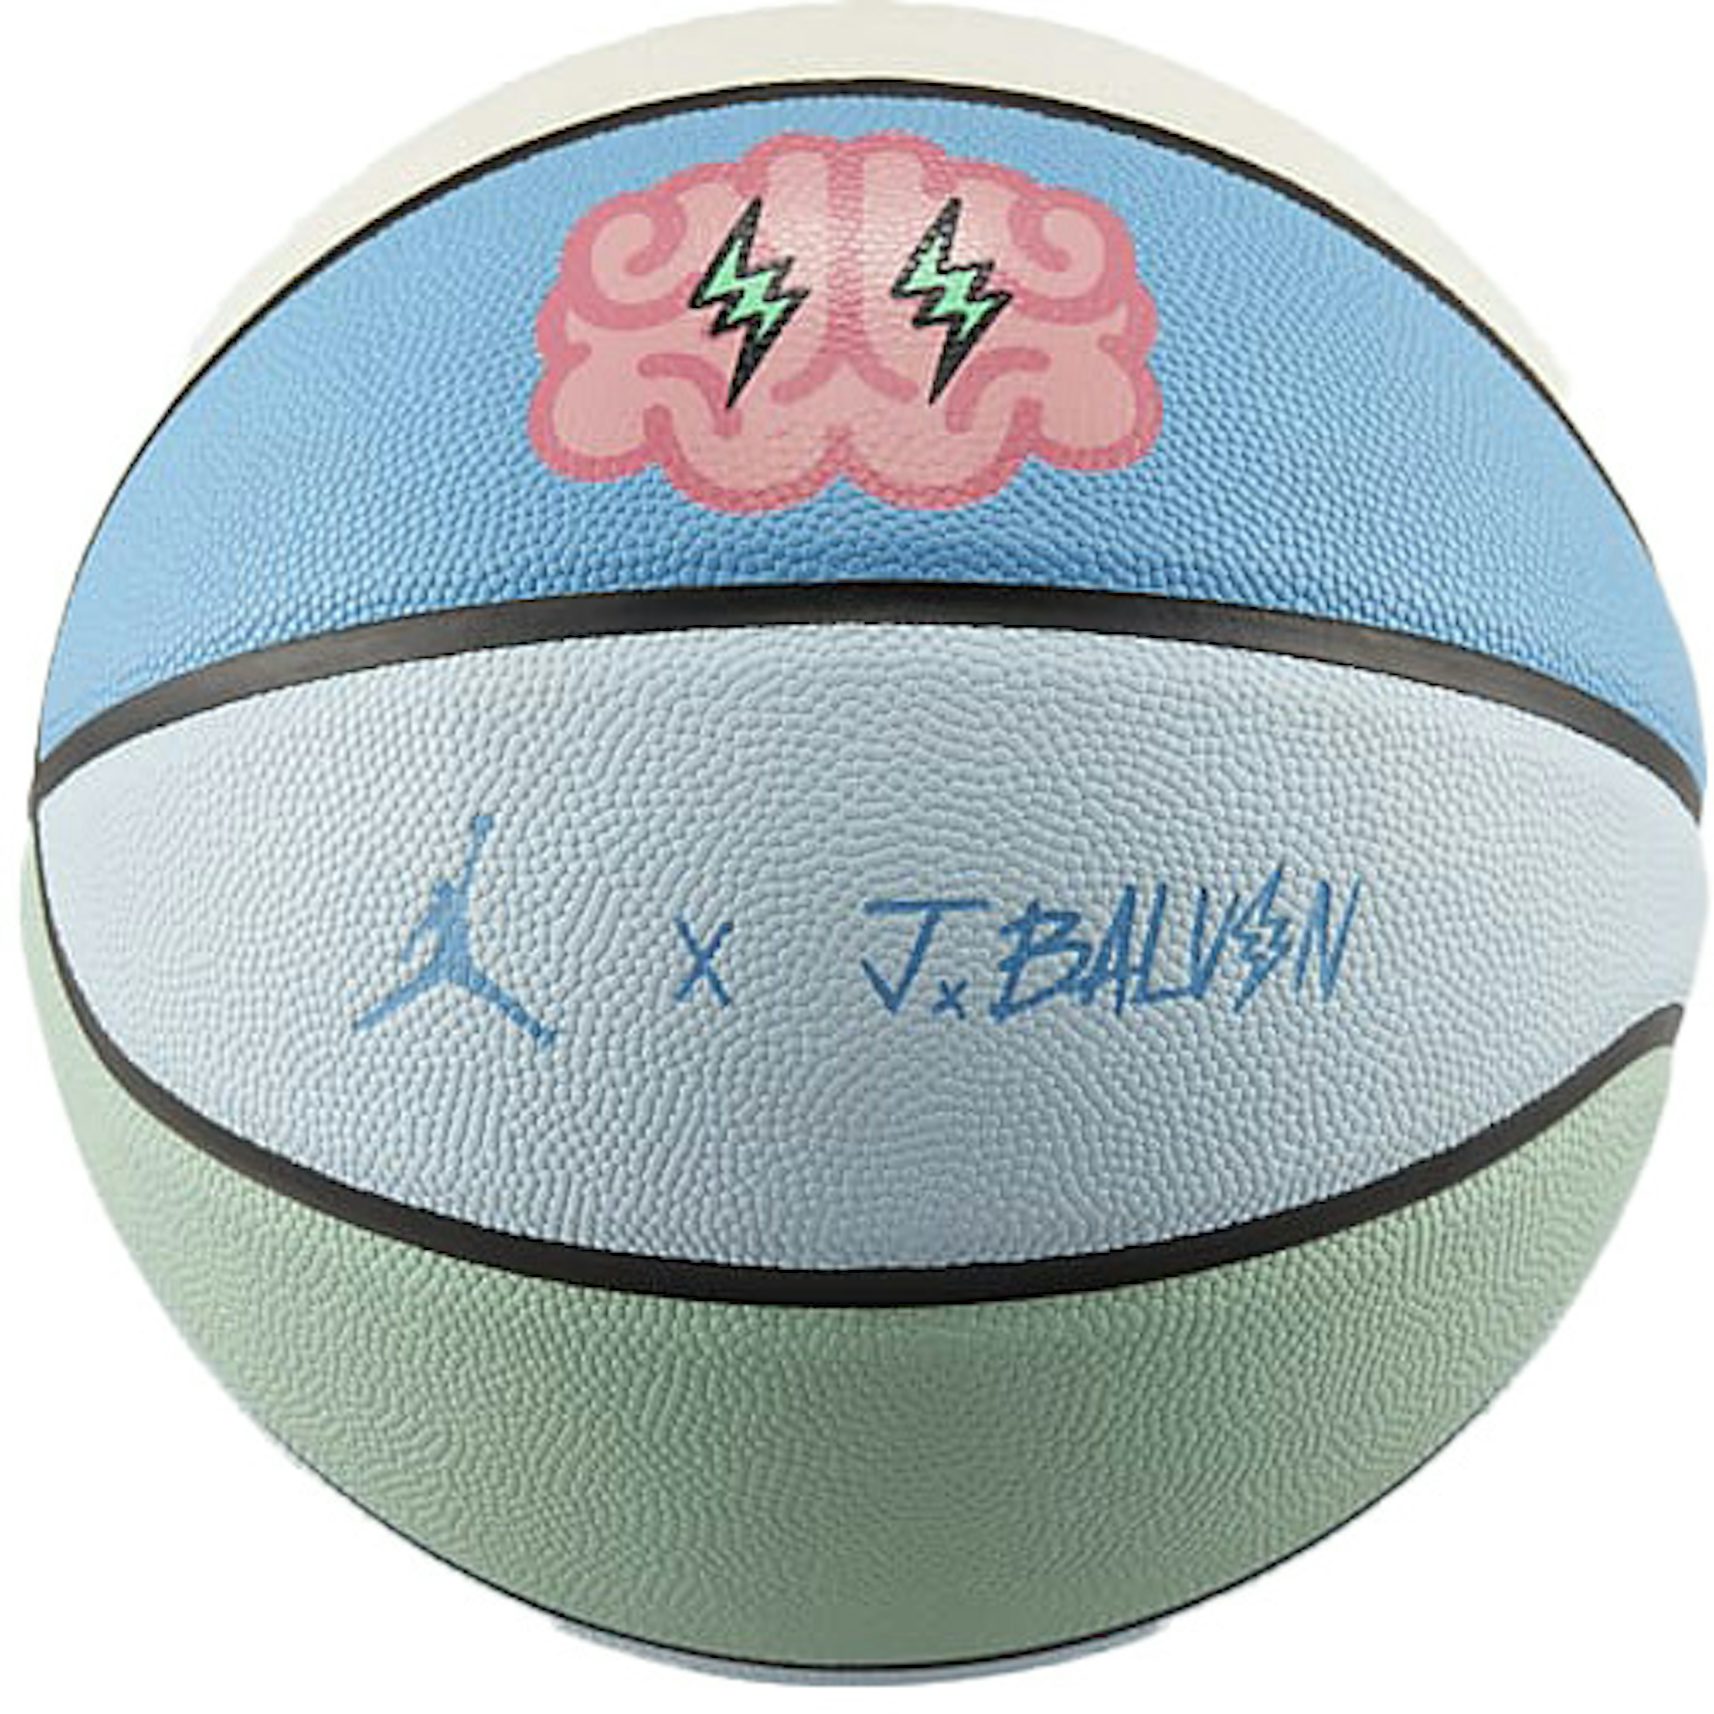 Jordan x JBalvin Everyday All Court Basketball - US